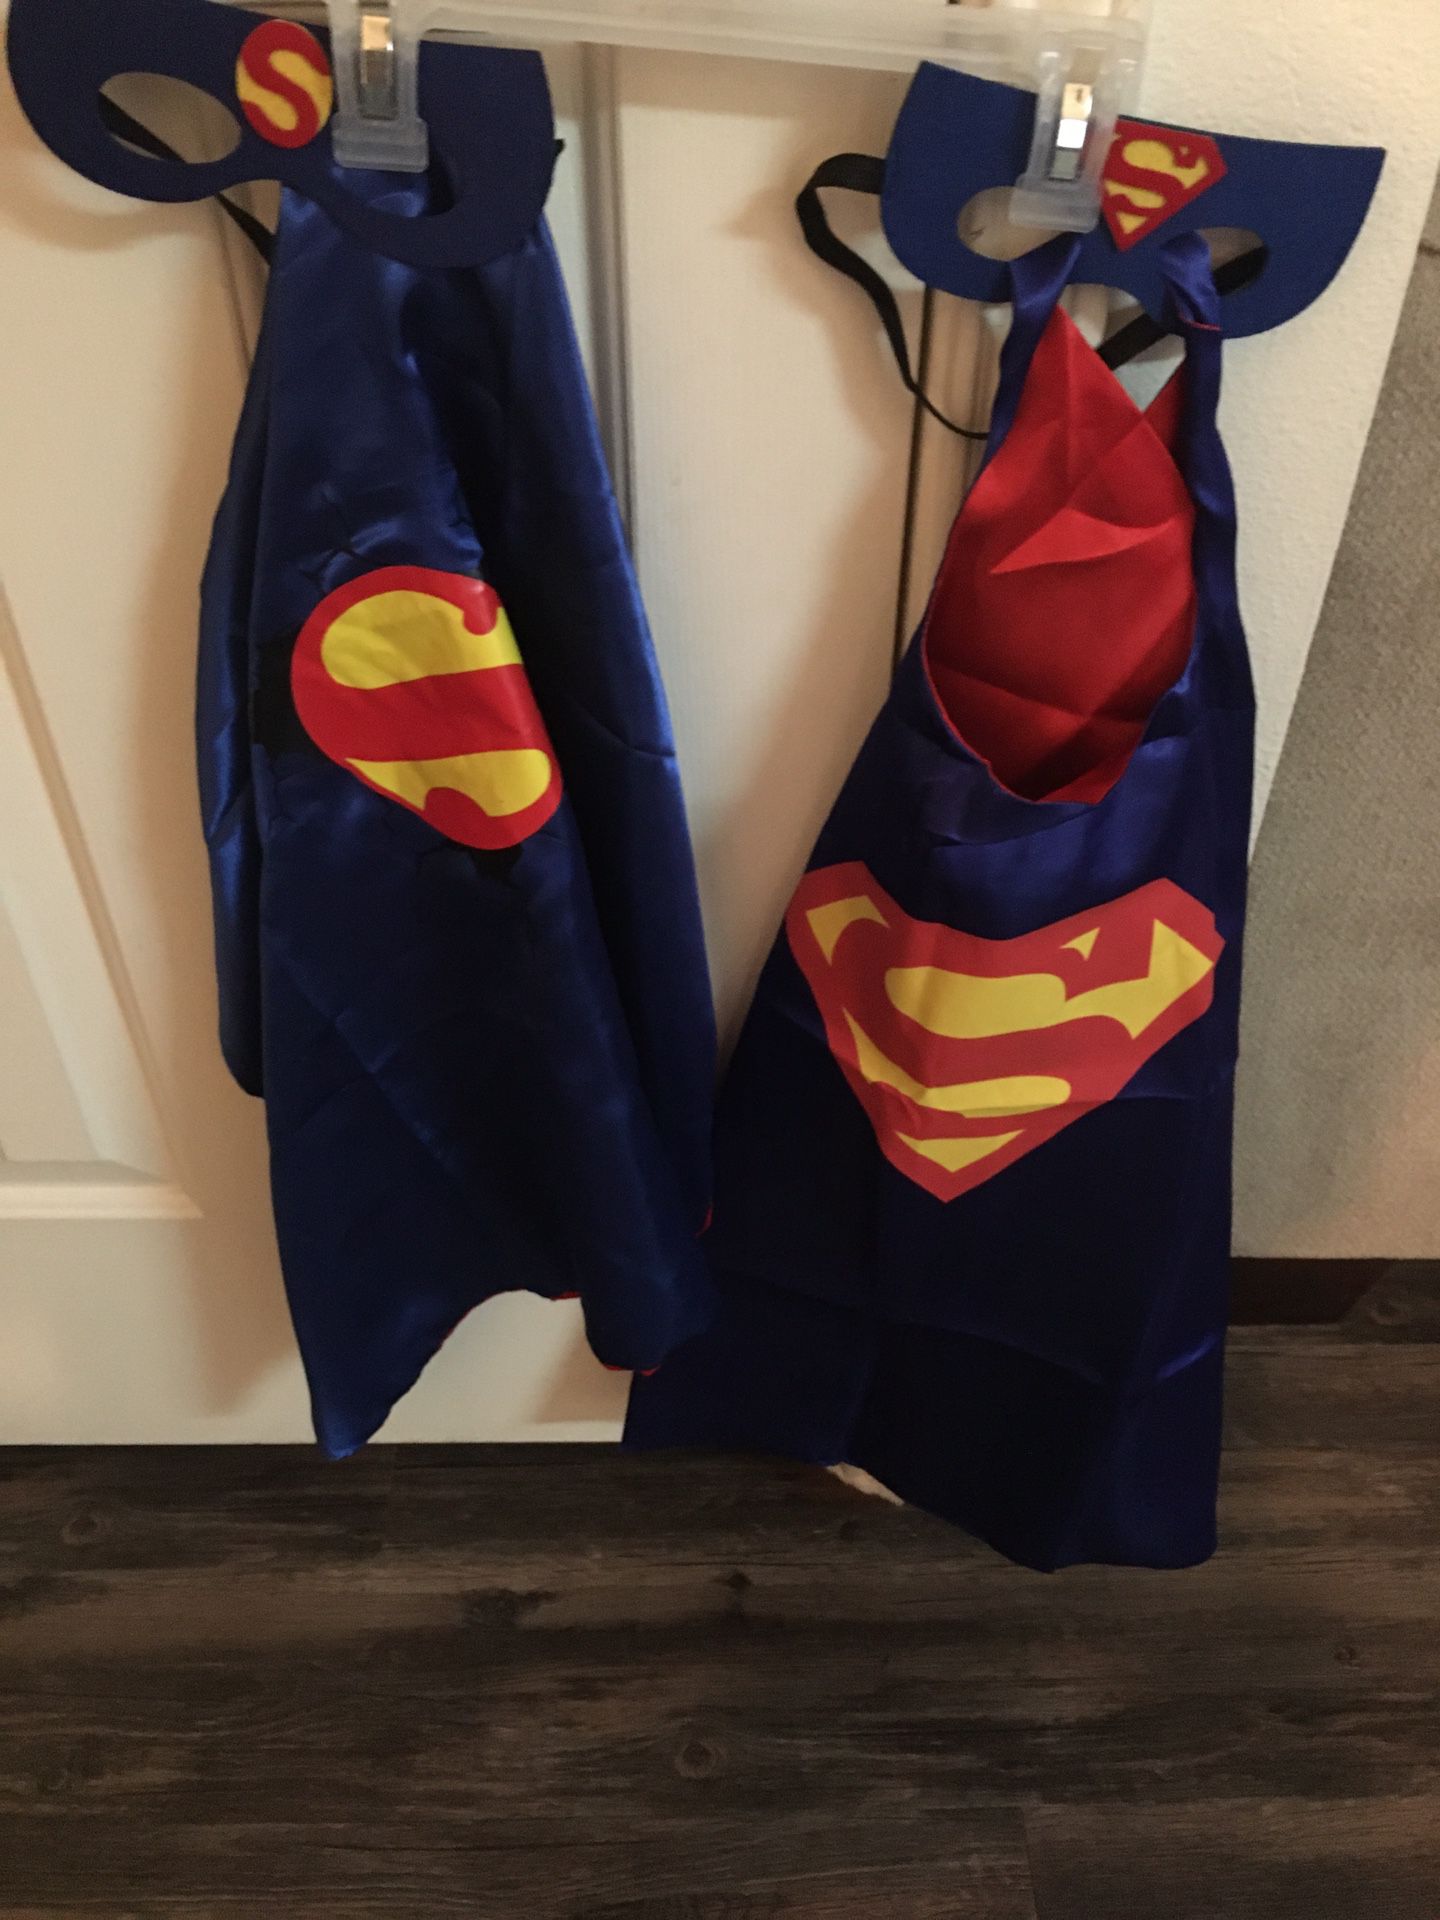 Super Hero Cape And Mask Set